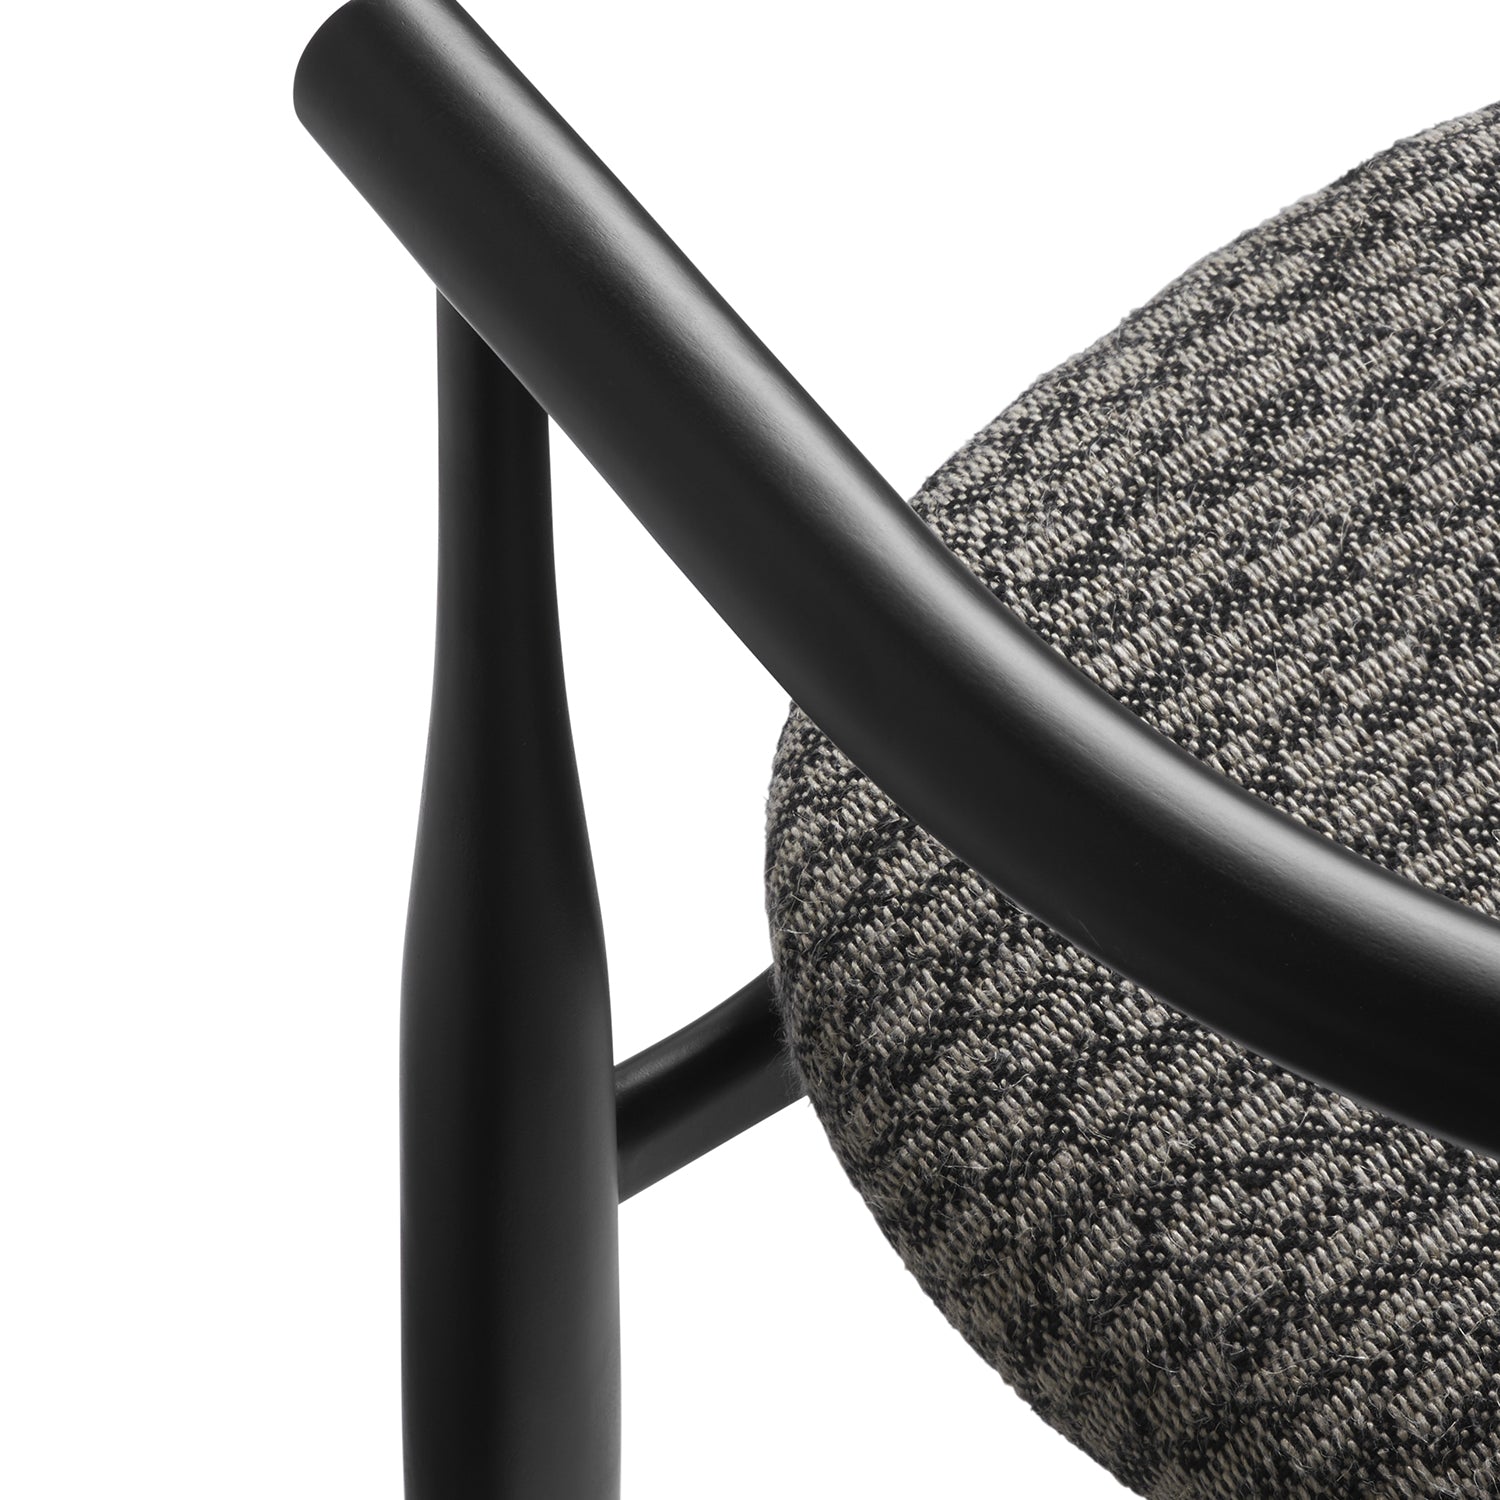 Bukowski Chair - The Design Choice